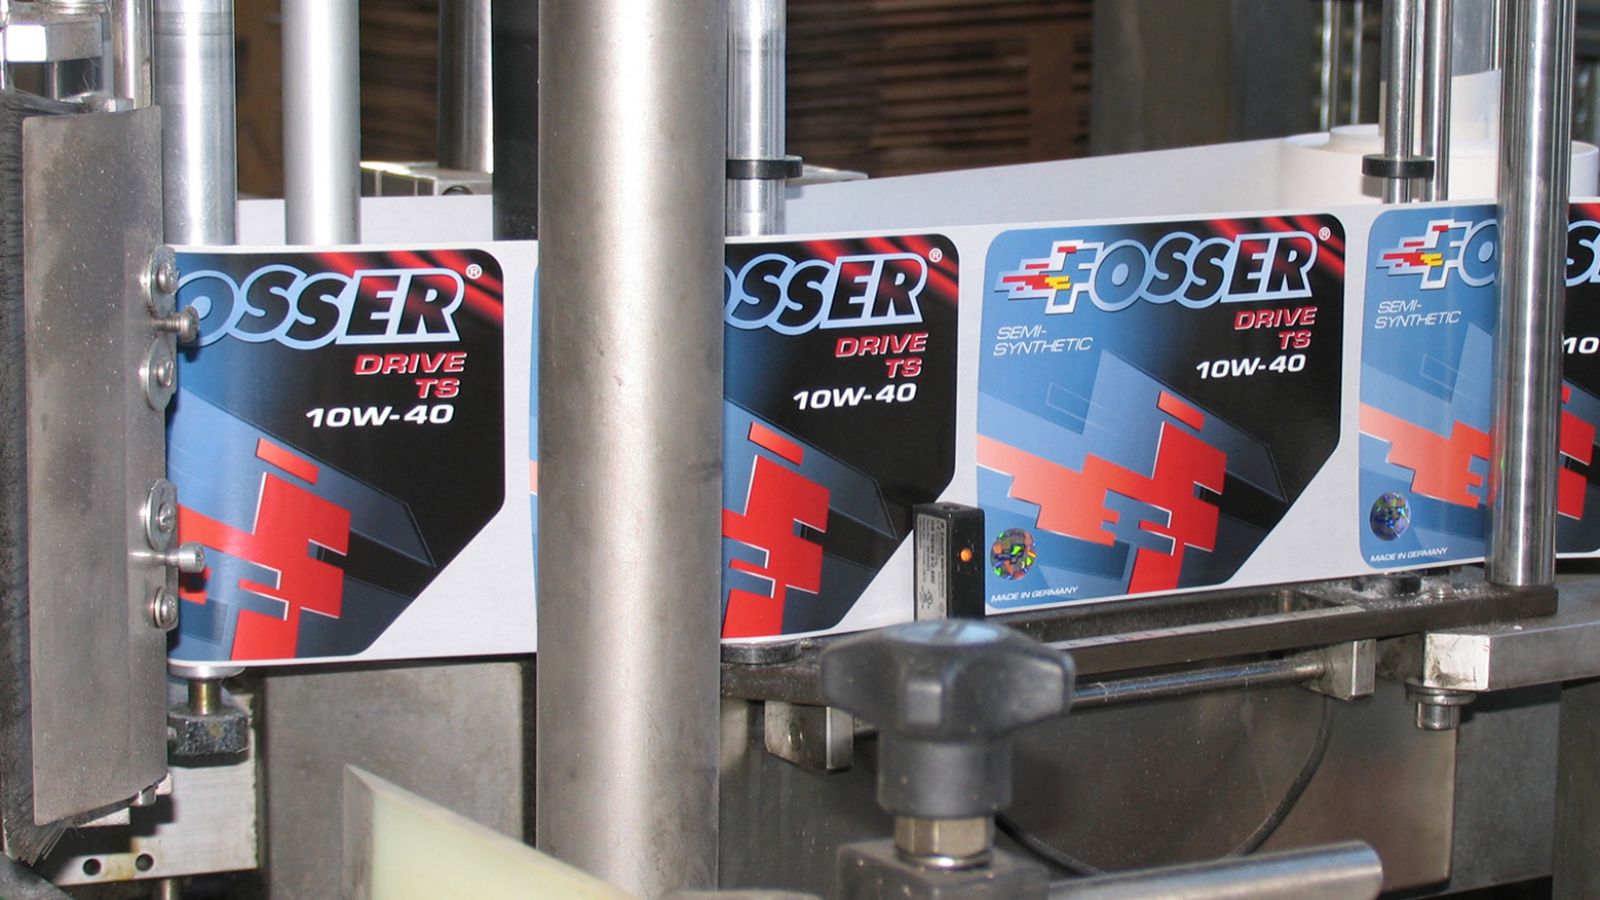 FOSSER - Motor Oil made in Germany